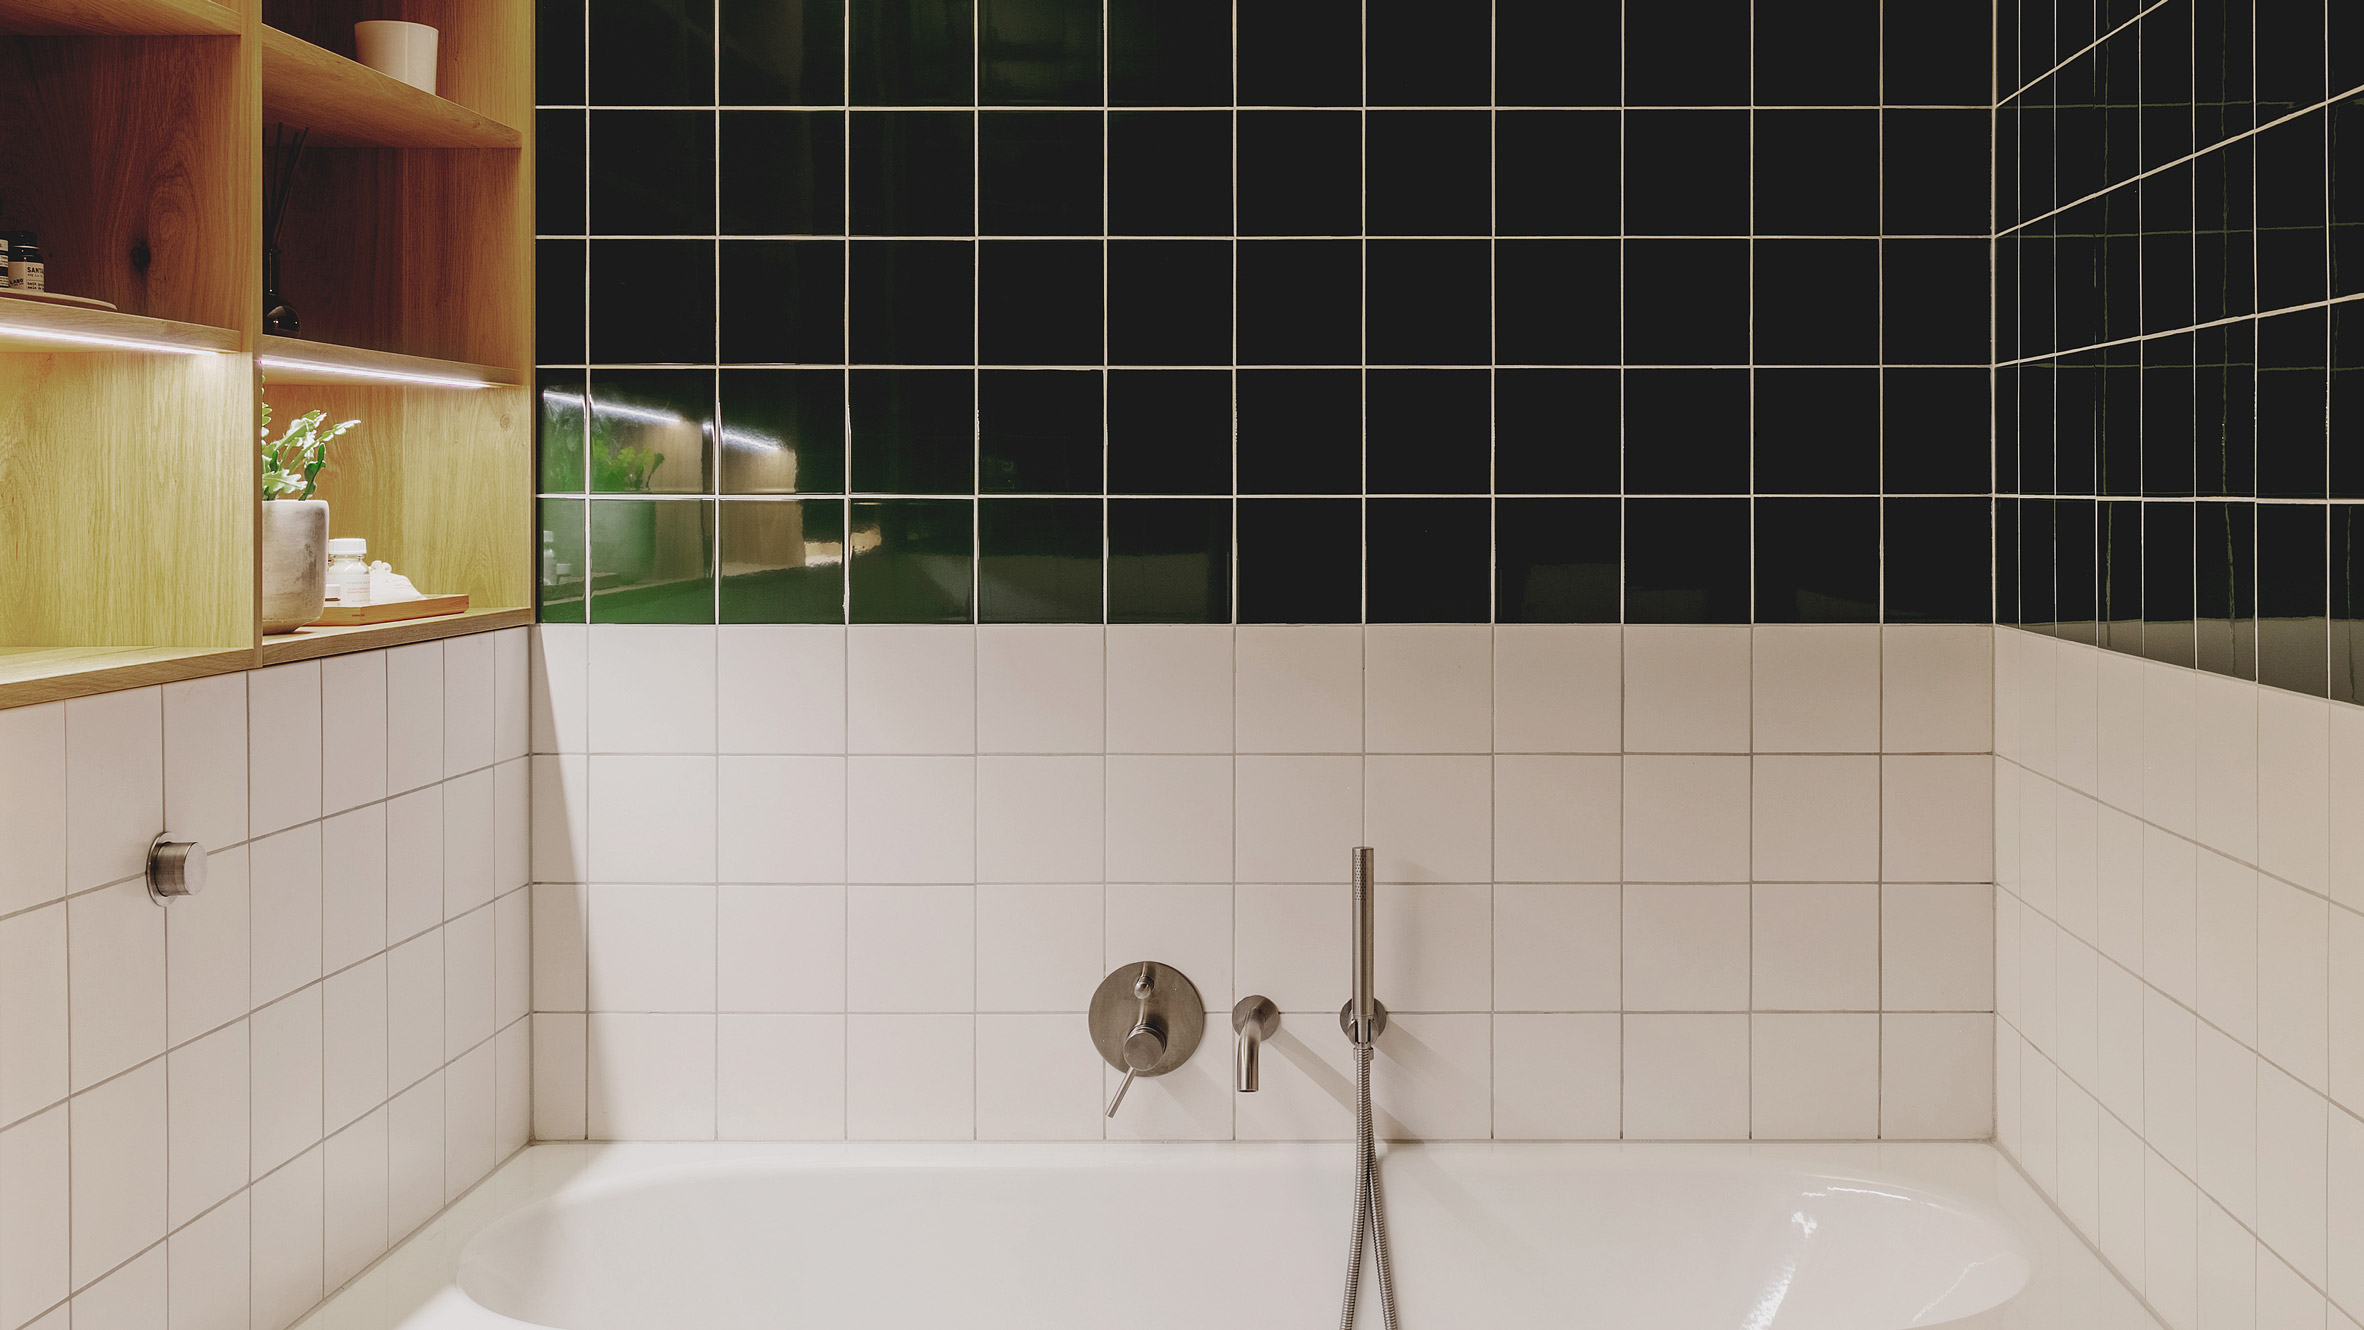 Eight stylish green bathrooms with a retro feel